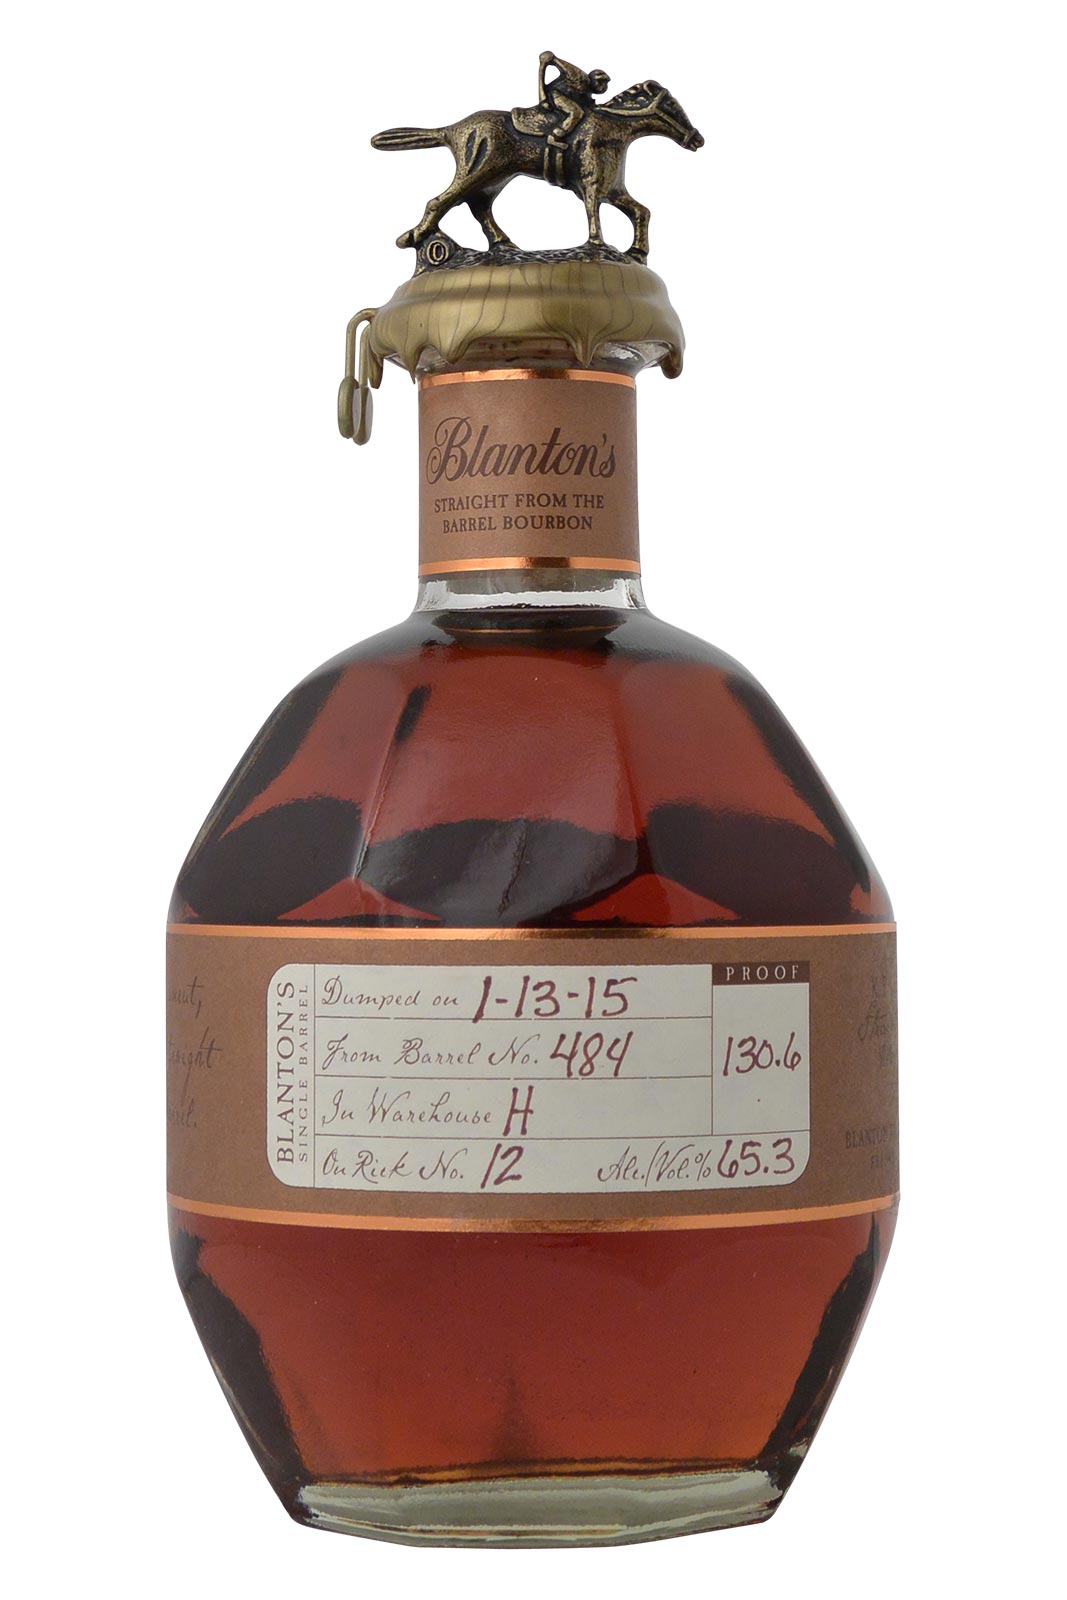 Blanton's Original Single Barrel Bourbon Whiskey